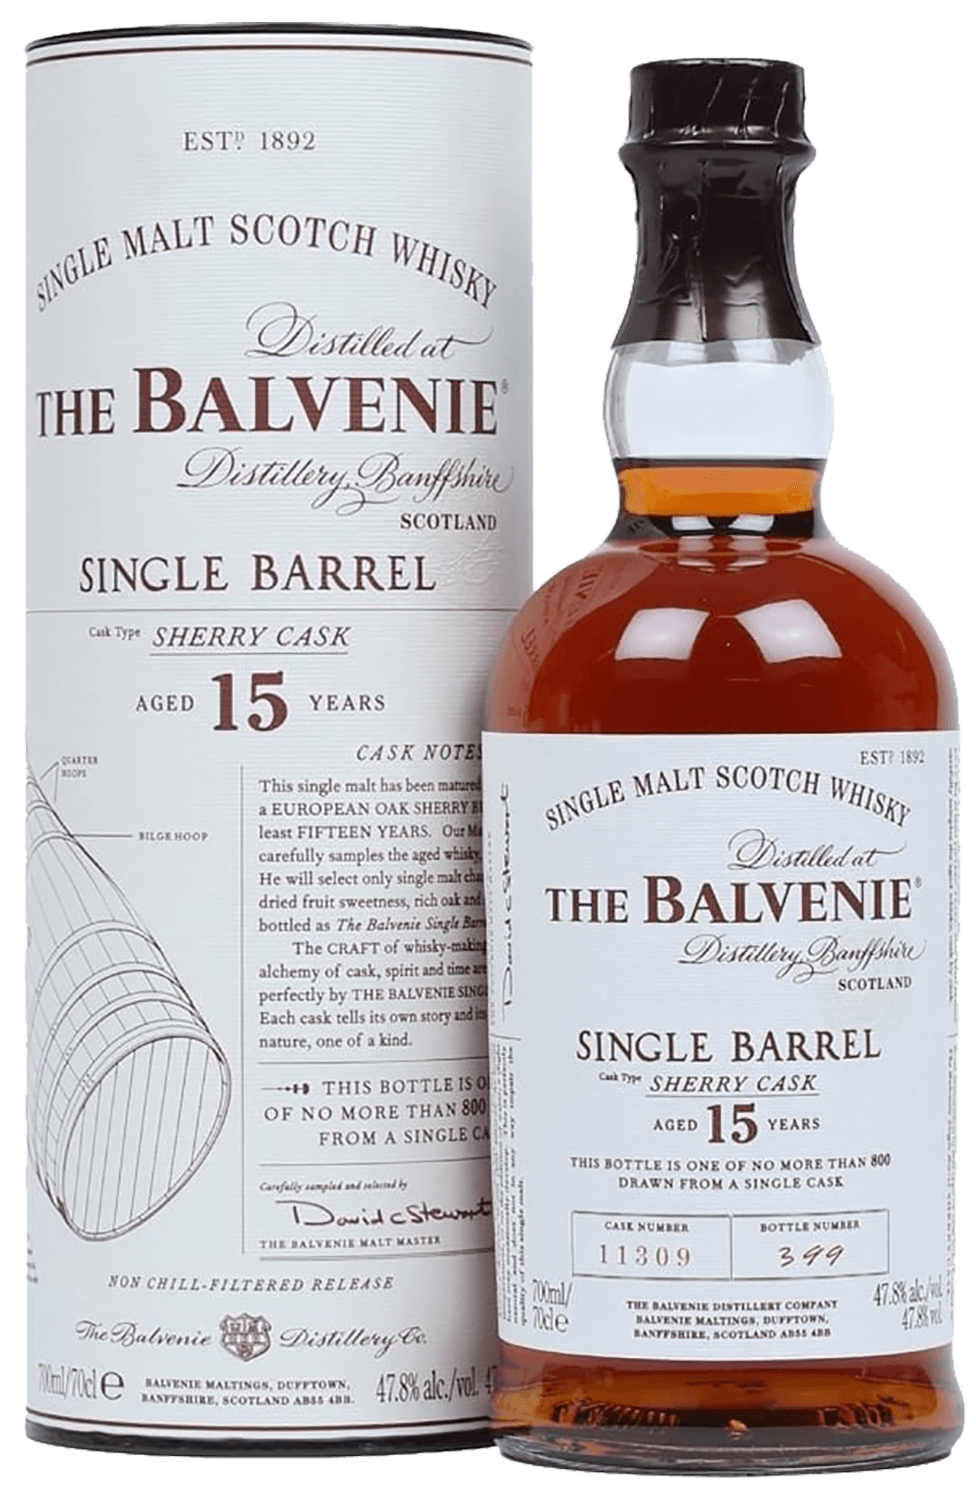 The Balvenie Single Barrel Sherry Cask 15 Years Old Single Malt Scotch Whisky (gift box) the balvenie single barrel 25 y o single malt scotch whisky gift box